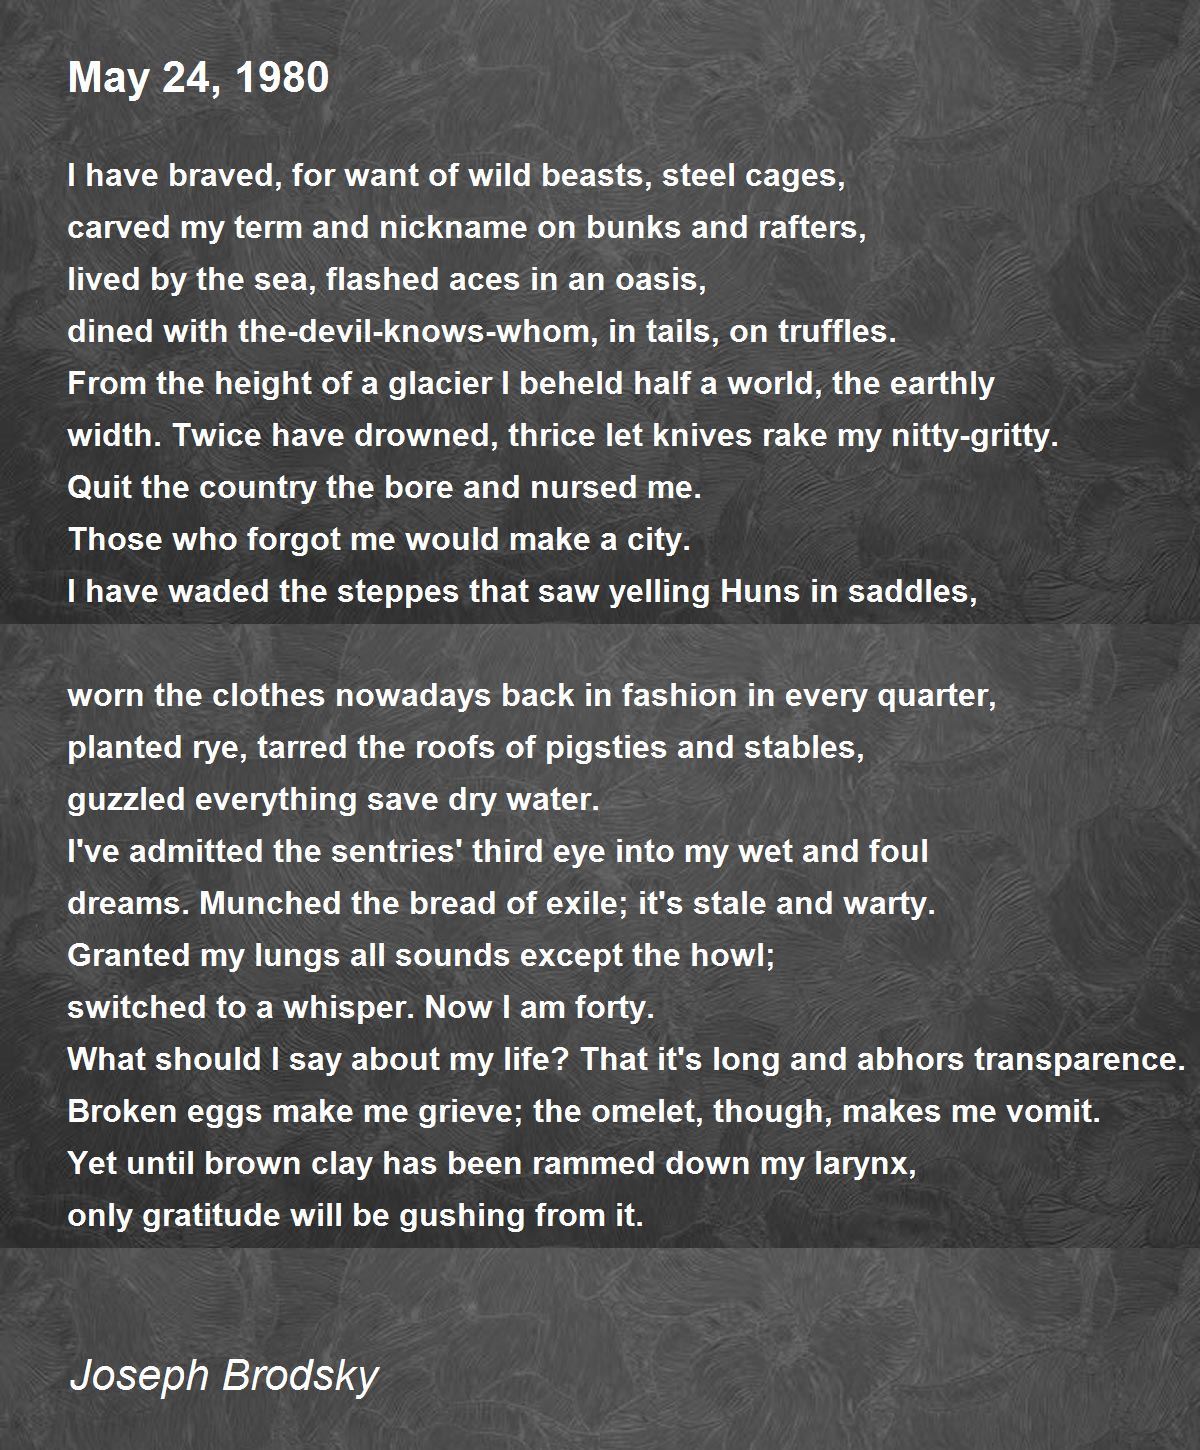 May 24, 1980 Poem by Joseph Brodsky - Poem Hunter